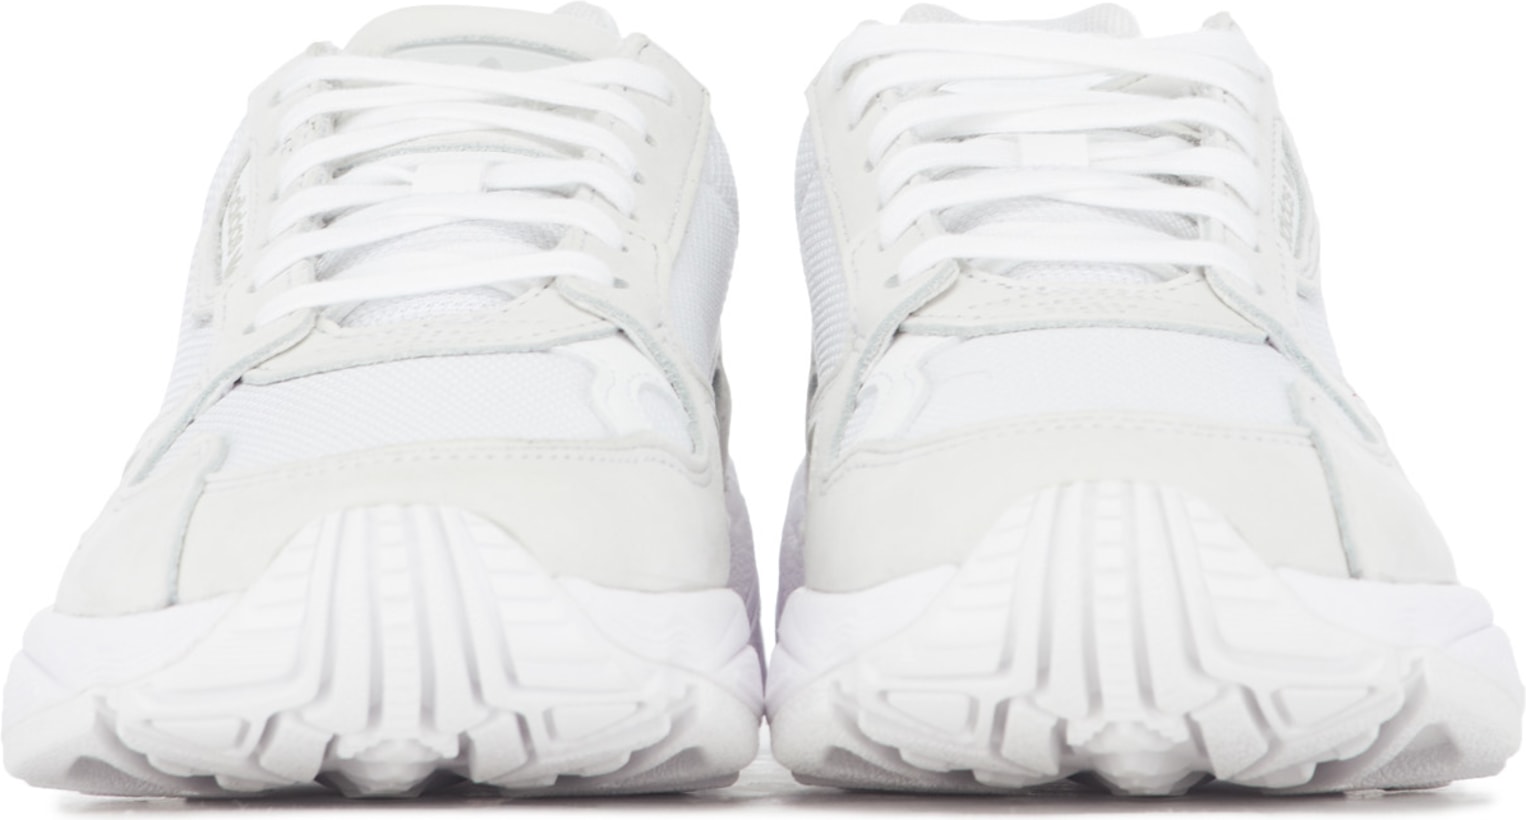 adidas Originals: Falcon - Footwear White/Footwear White/Crystal White ...